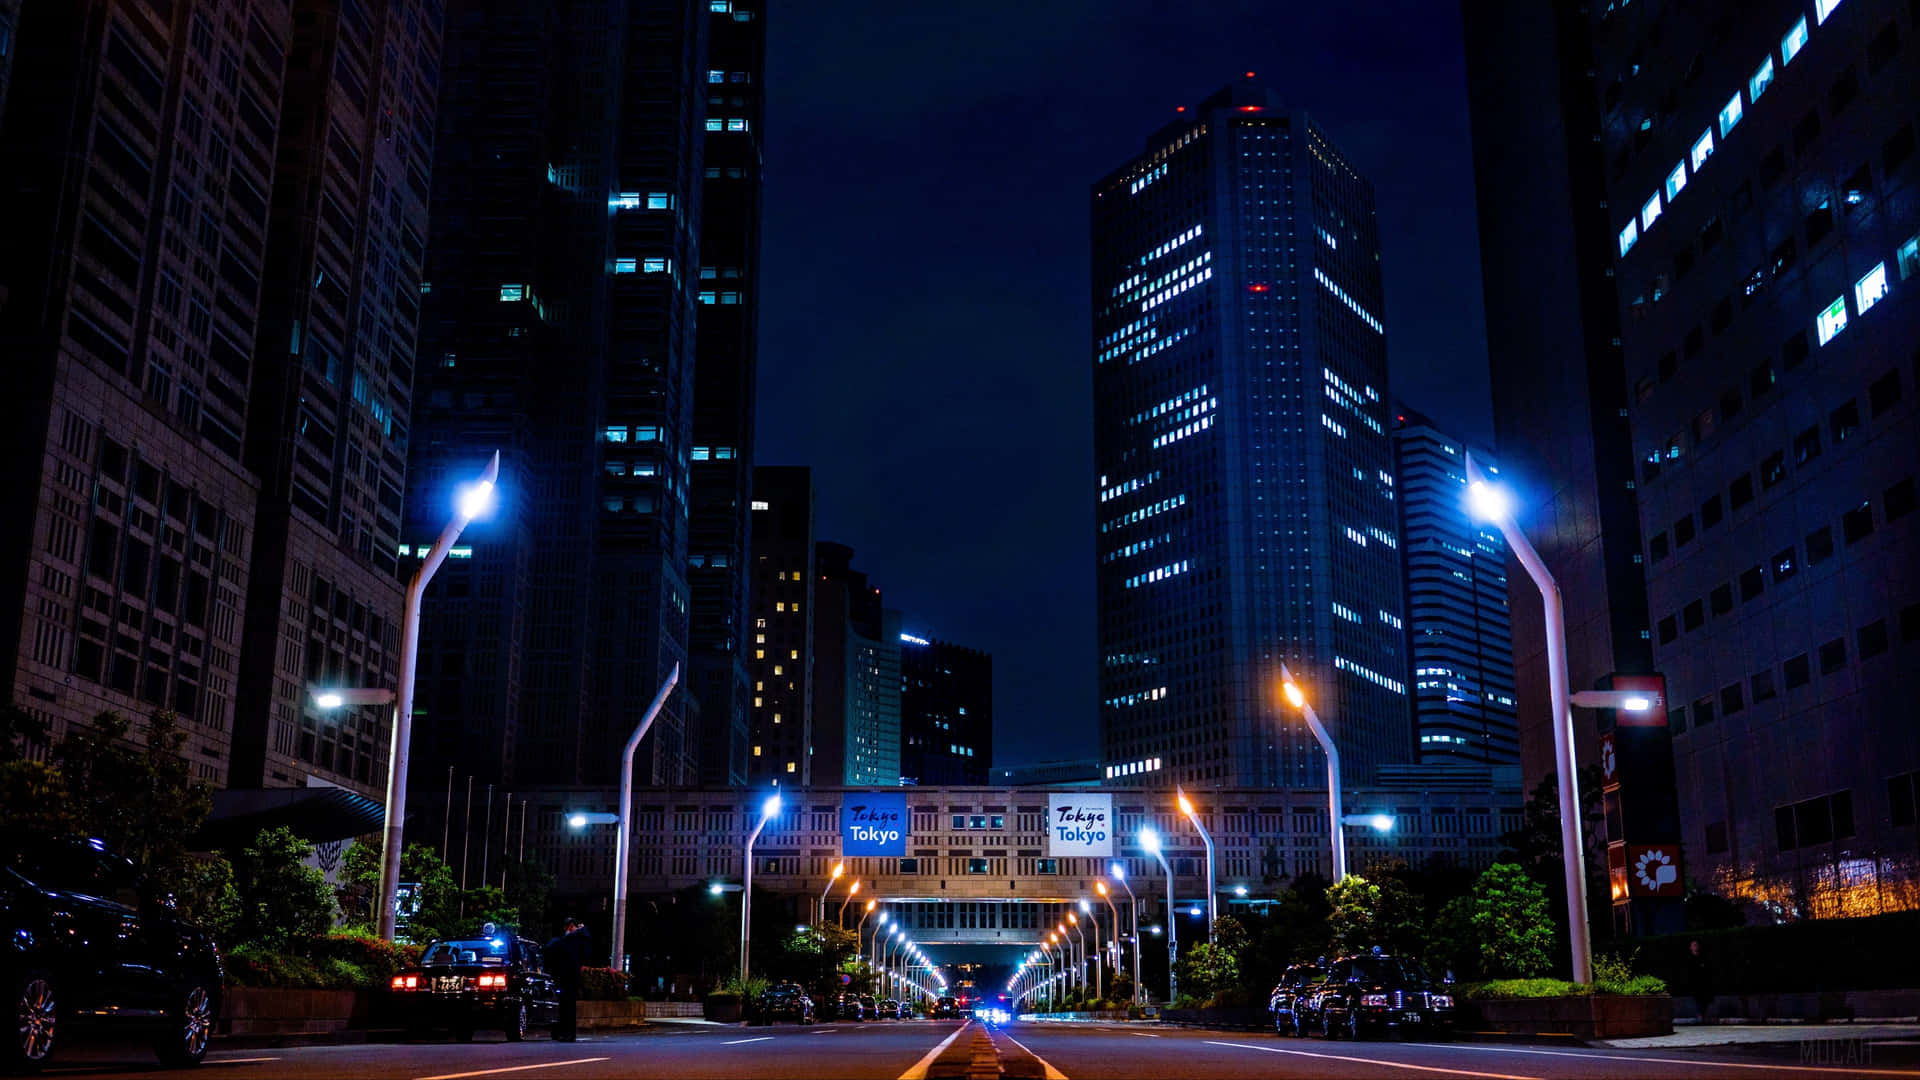 Caption: Stunning City Lights Illuminate the Night Sky